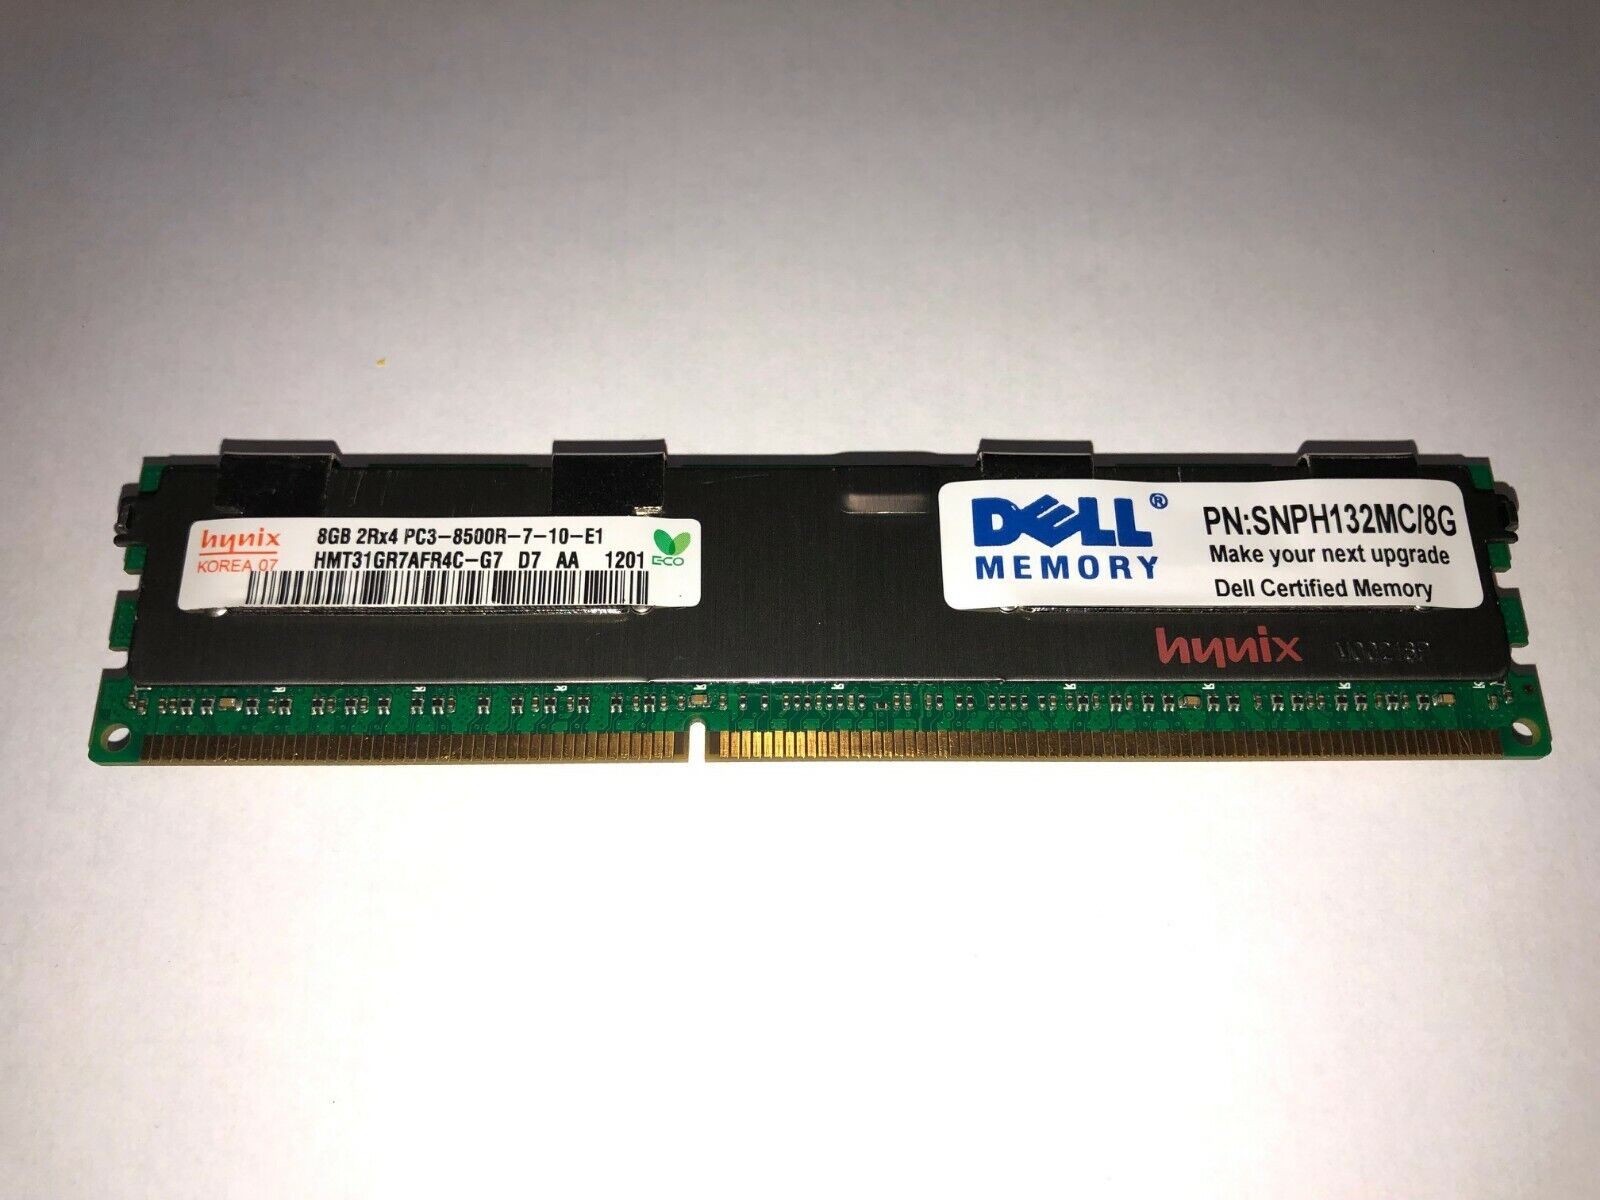 Dell DIMM 1066 MHz DDR3 Memory (SNPH132MC8G)Server Memory